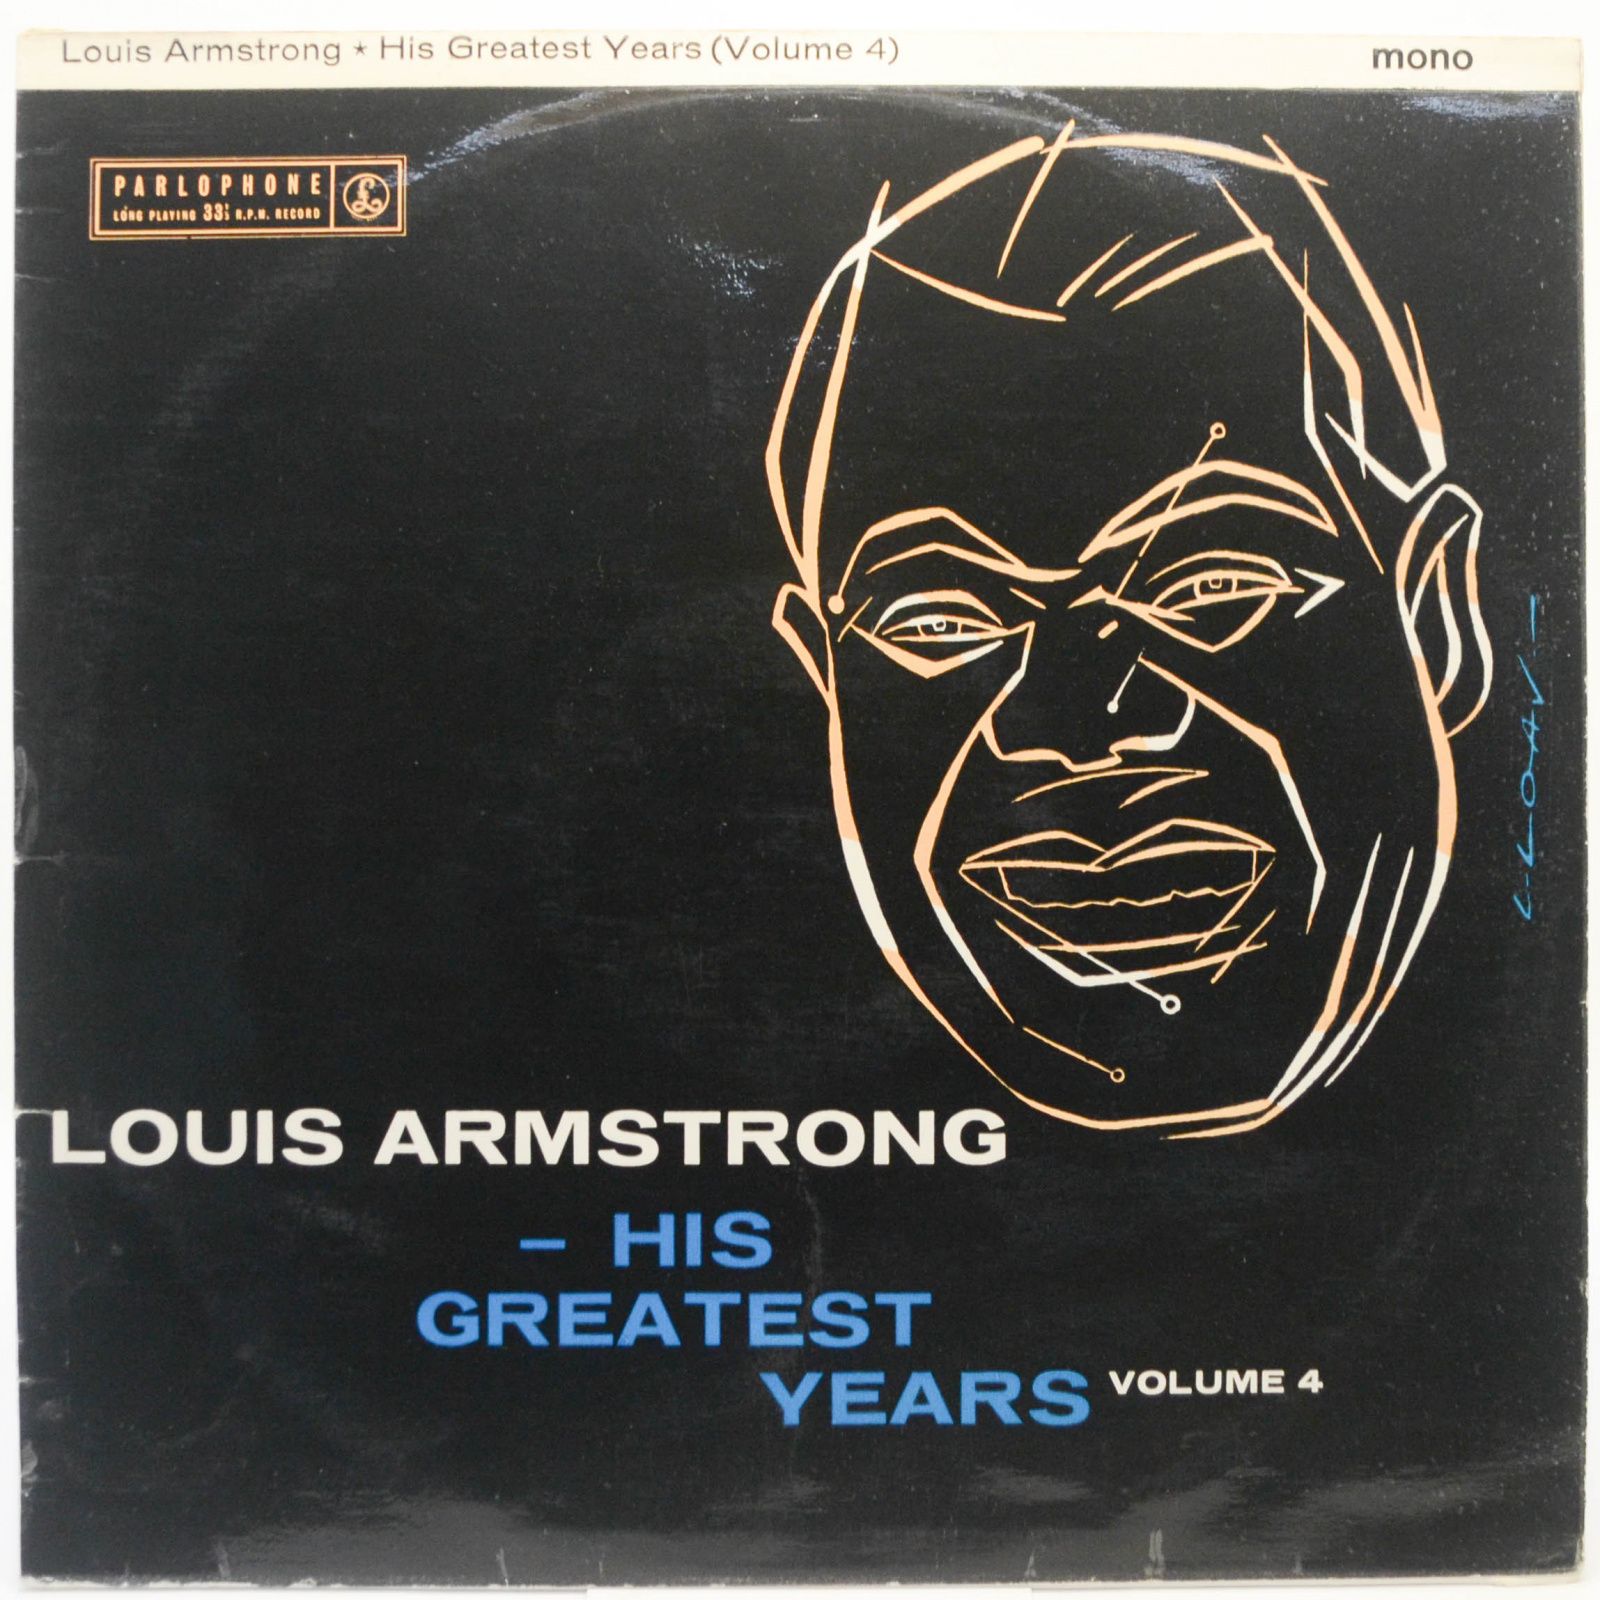 His Greatest Years - Volume 4 (UK), 1961